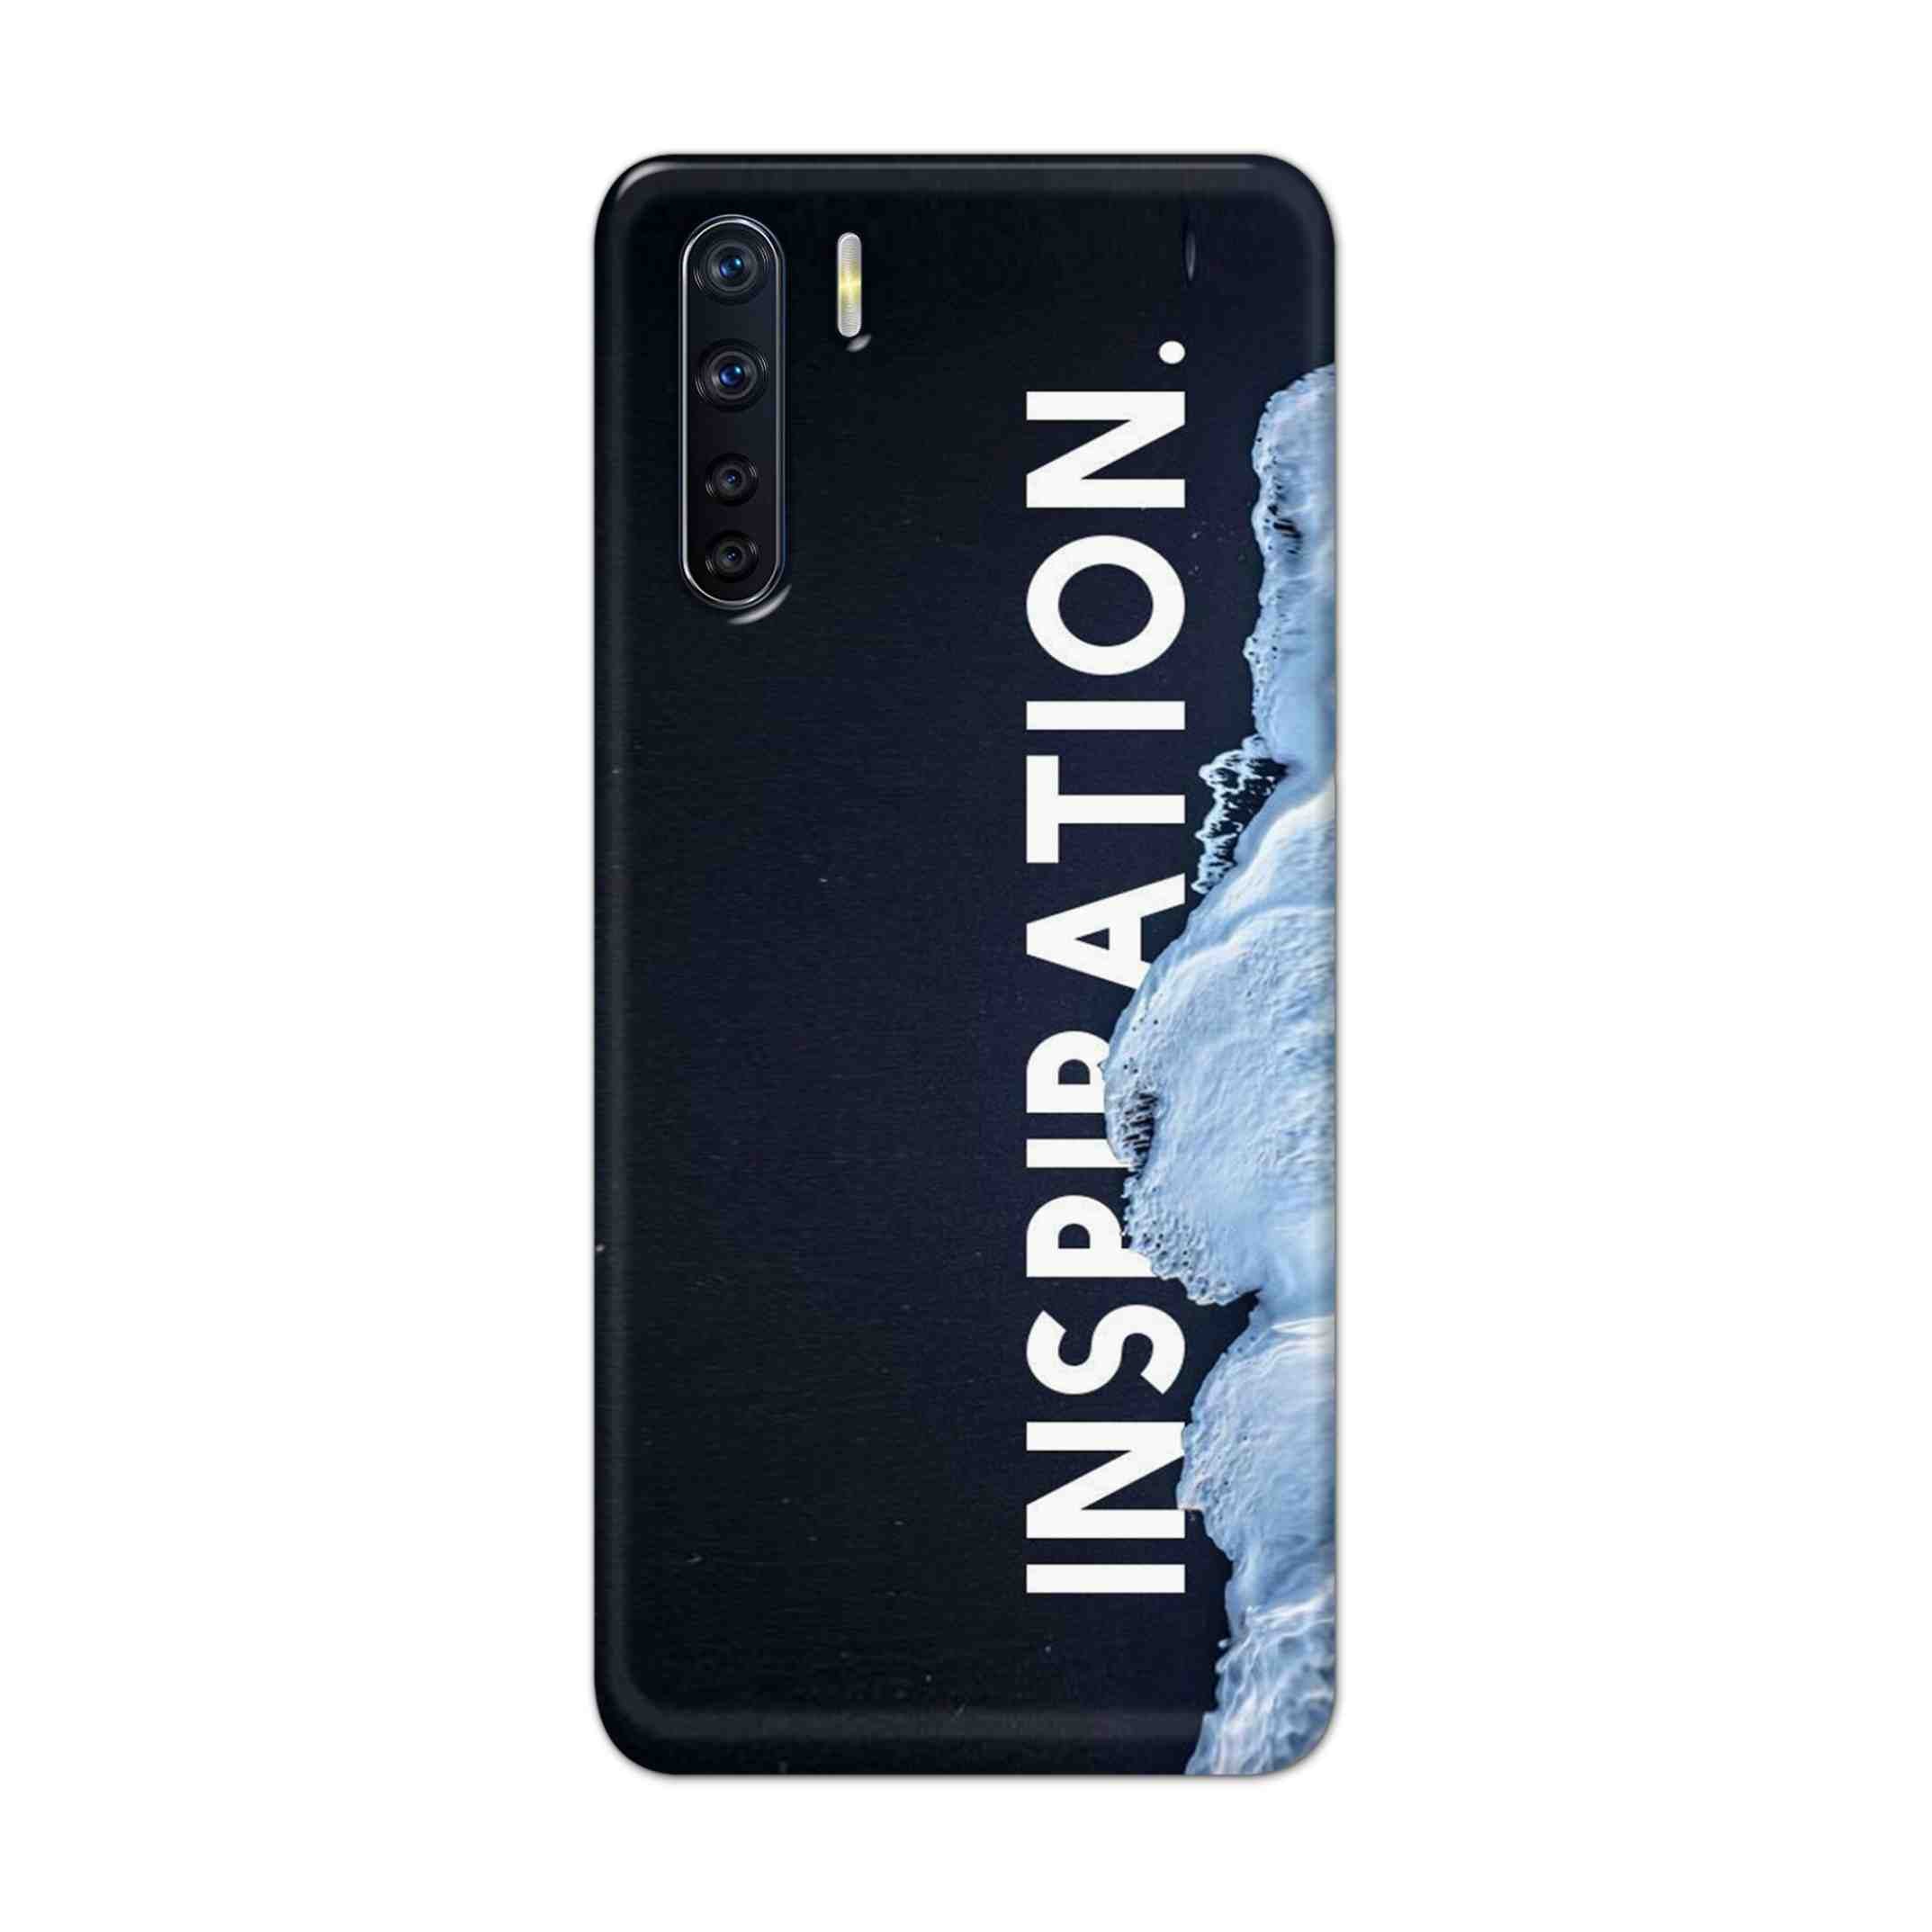 Buy Inspiration Hard Back Mobile Phone Case Cover For OPPO F15 Online